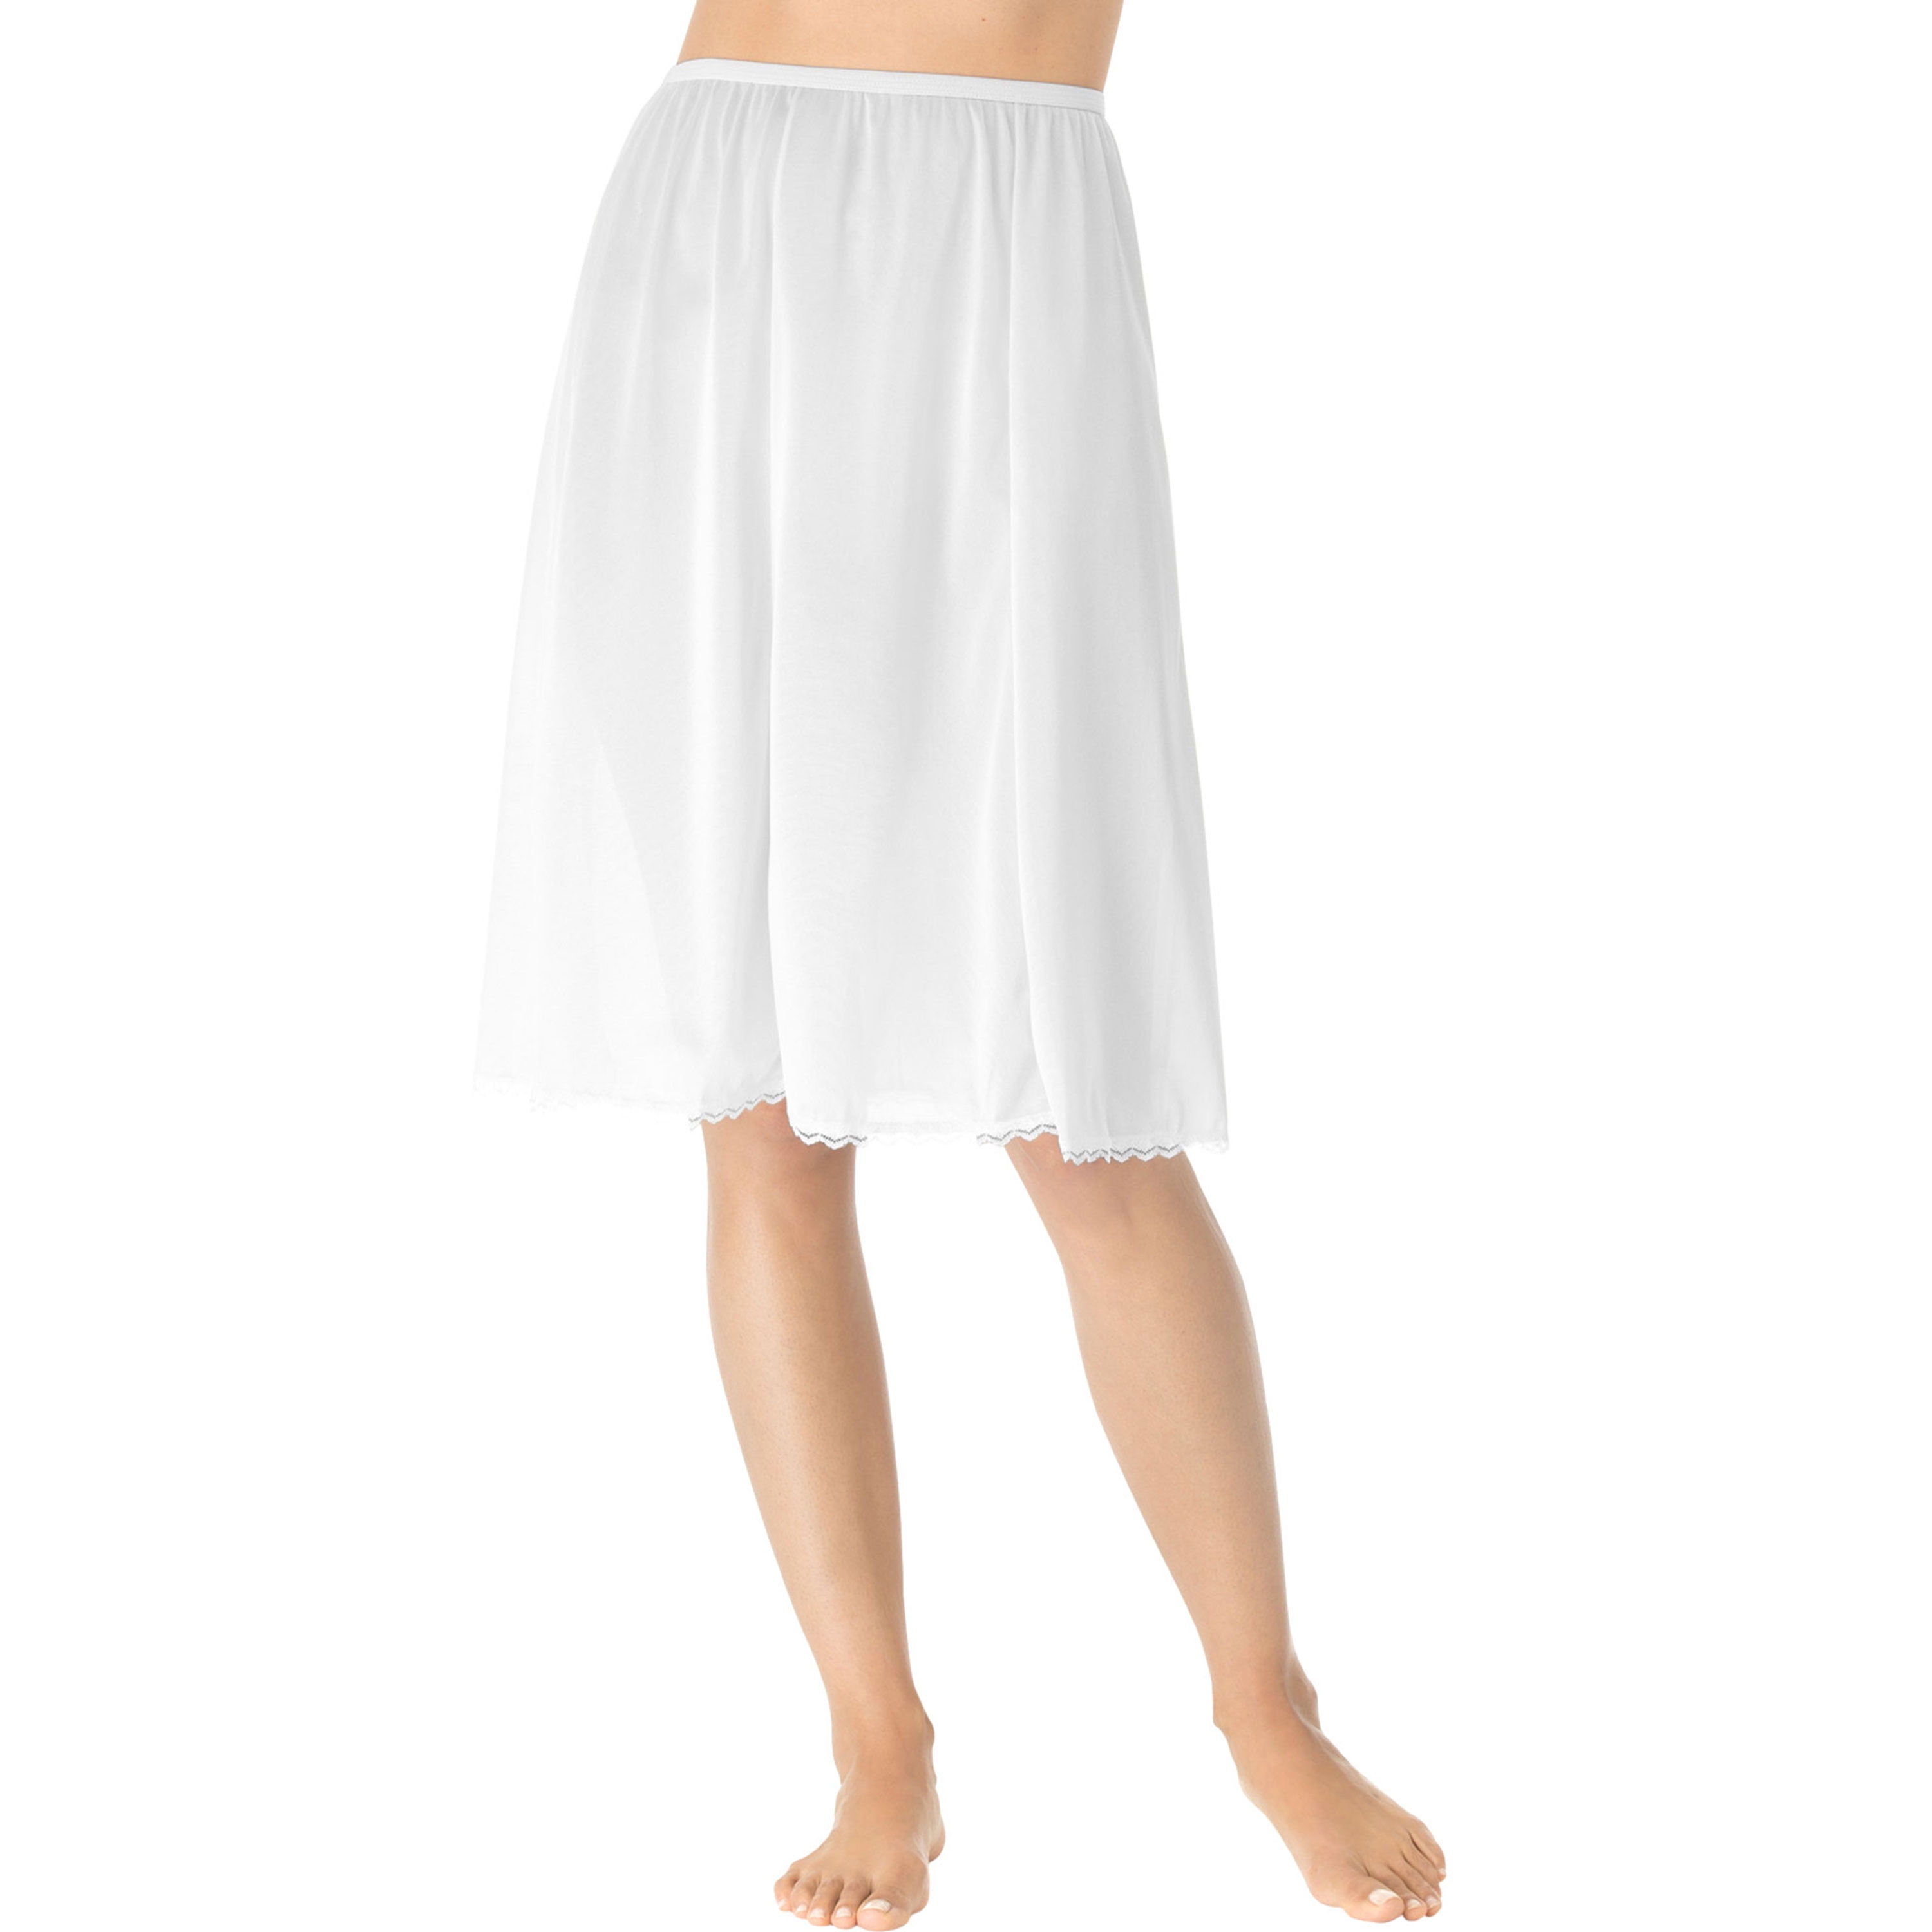 Women Half Slip Underskirt Petticoat Cling Resistant Stretch 3 Length 6 Colors 